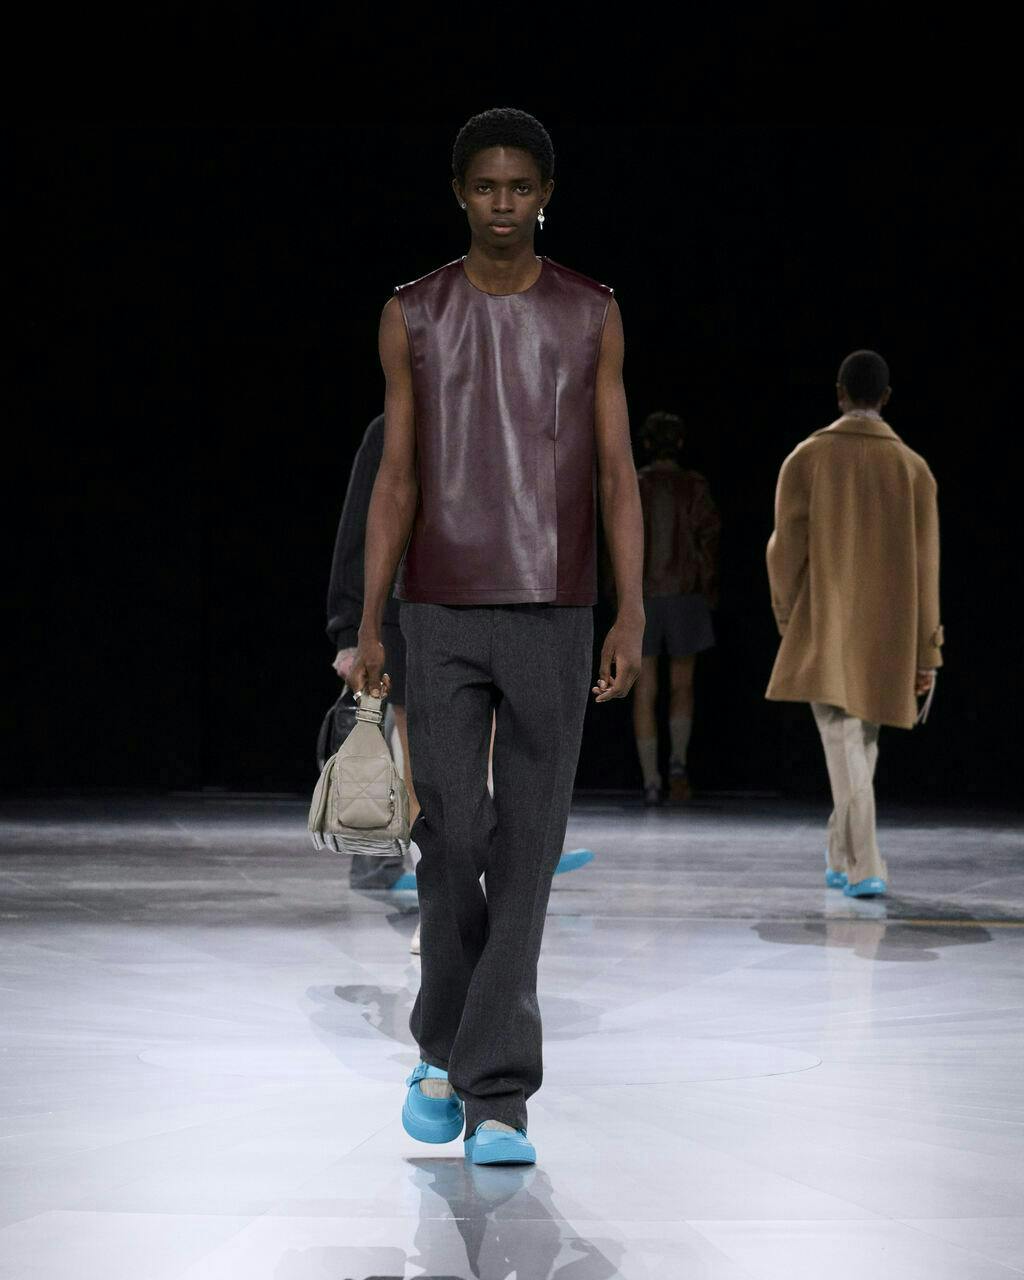 fashion coat adult male man person pants shoe handbag face